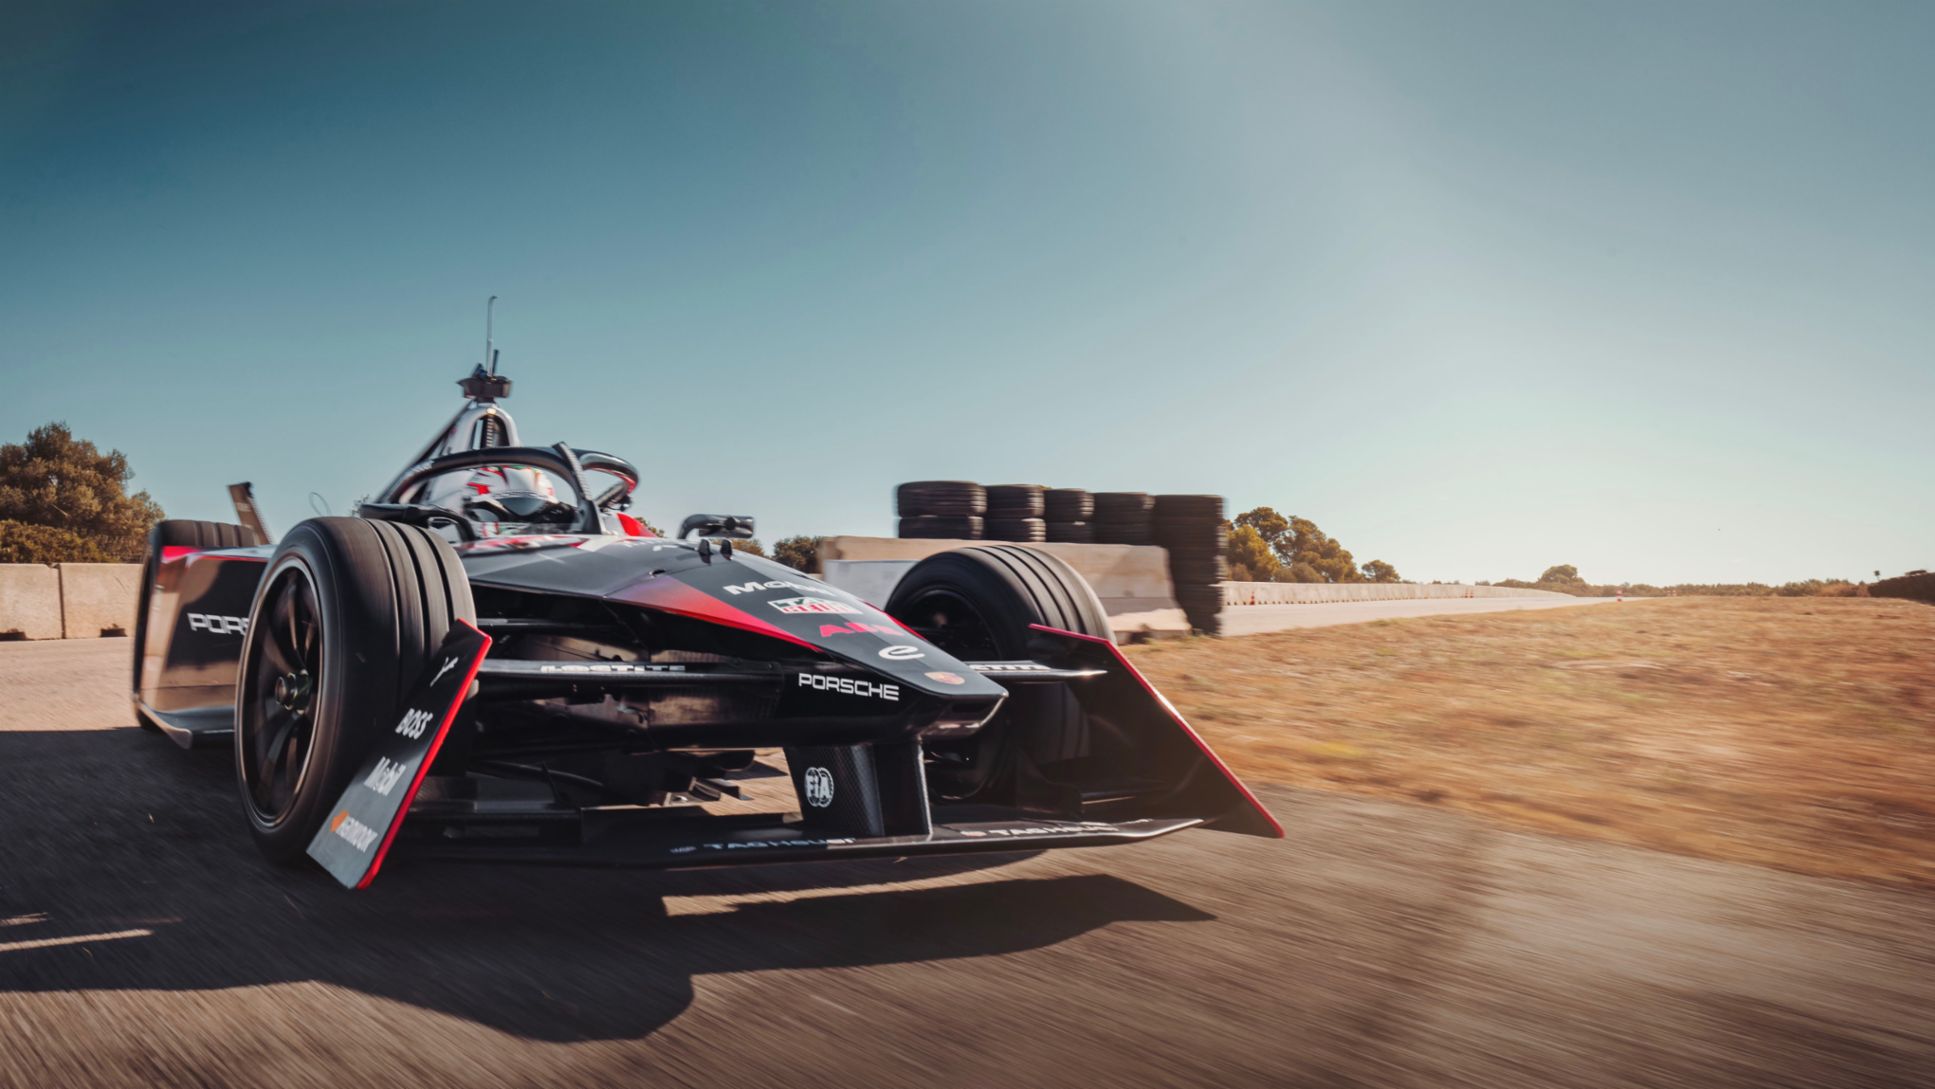 The new Formula E racing car represents a technological milestone